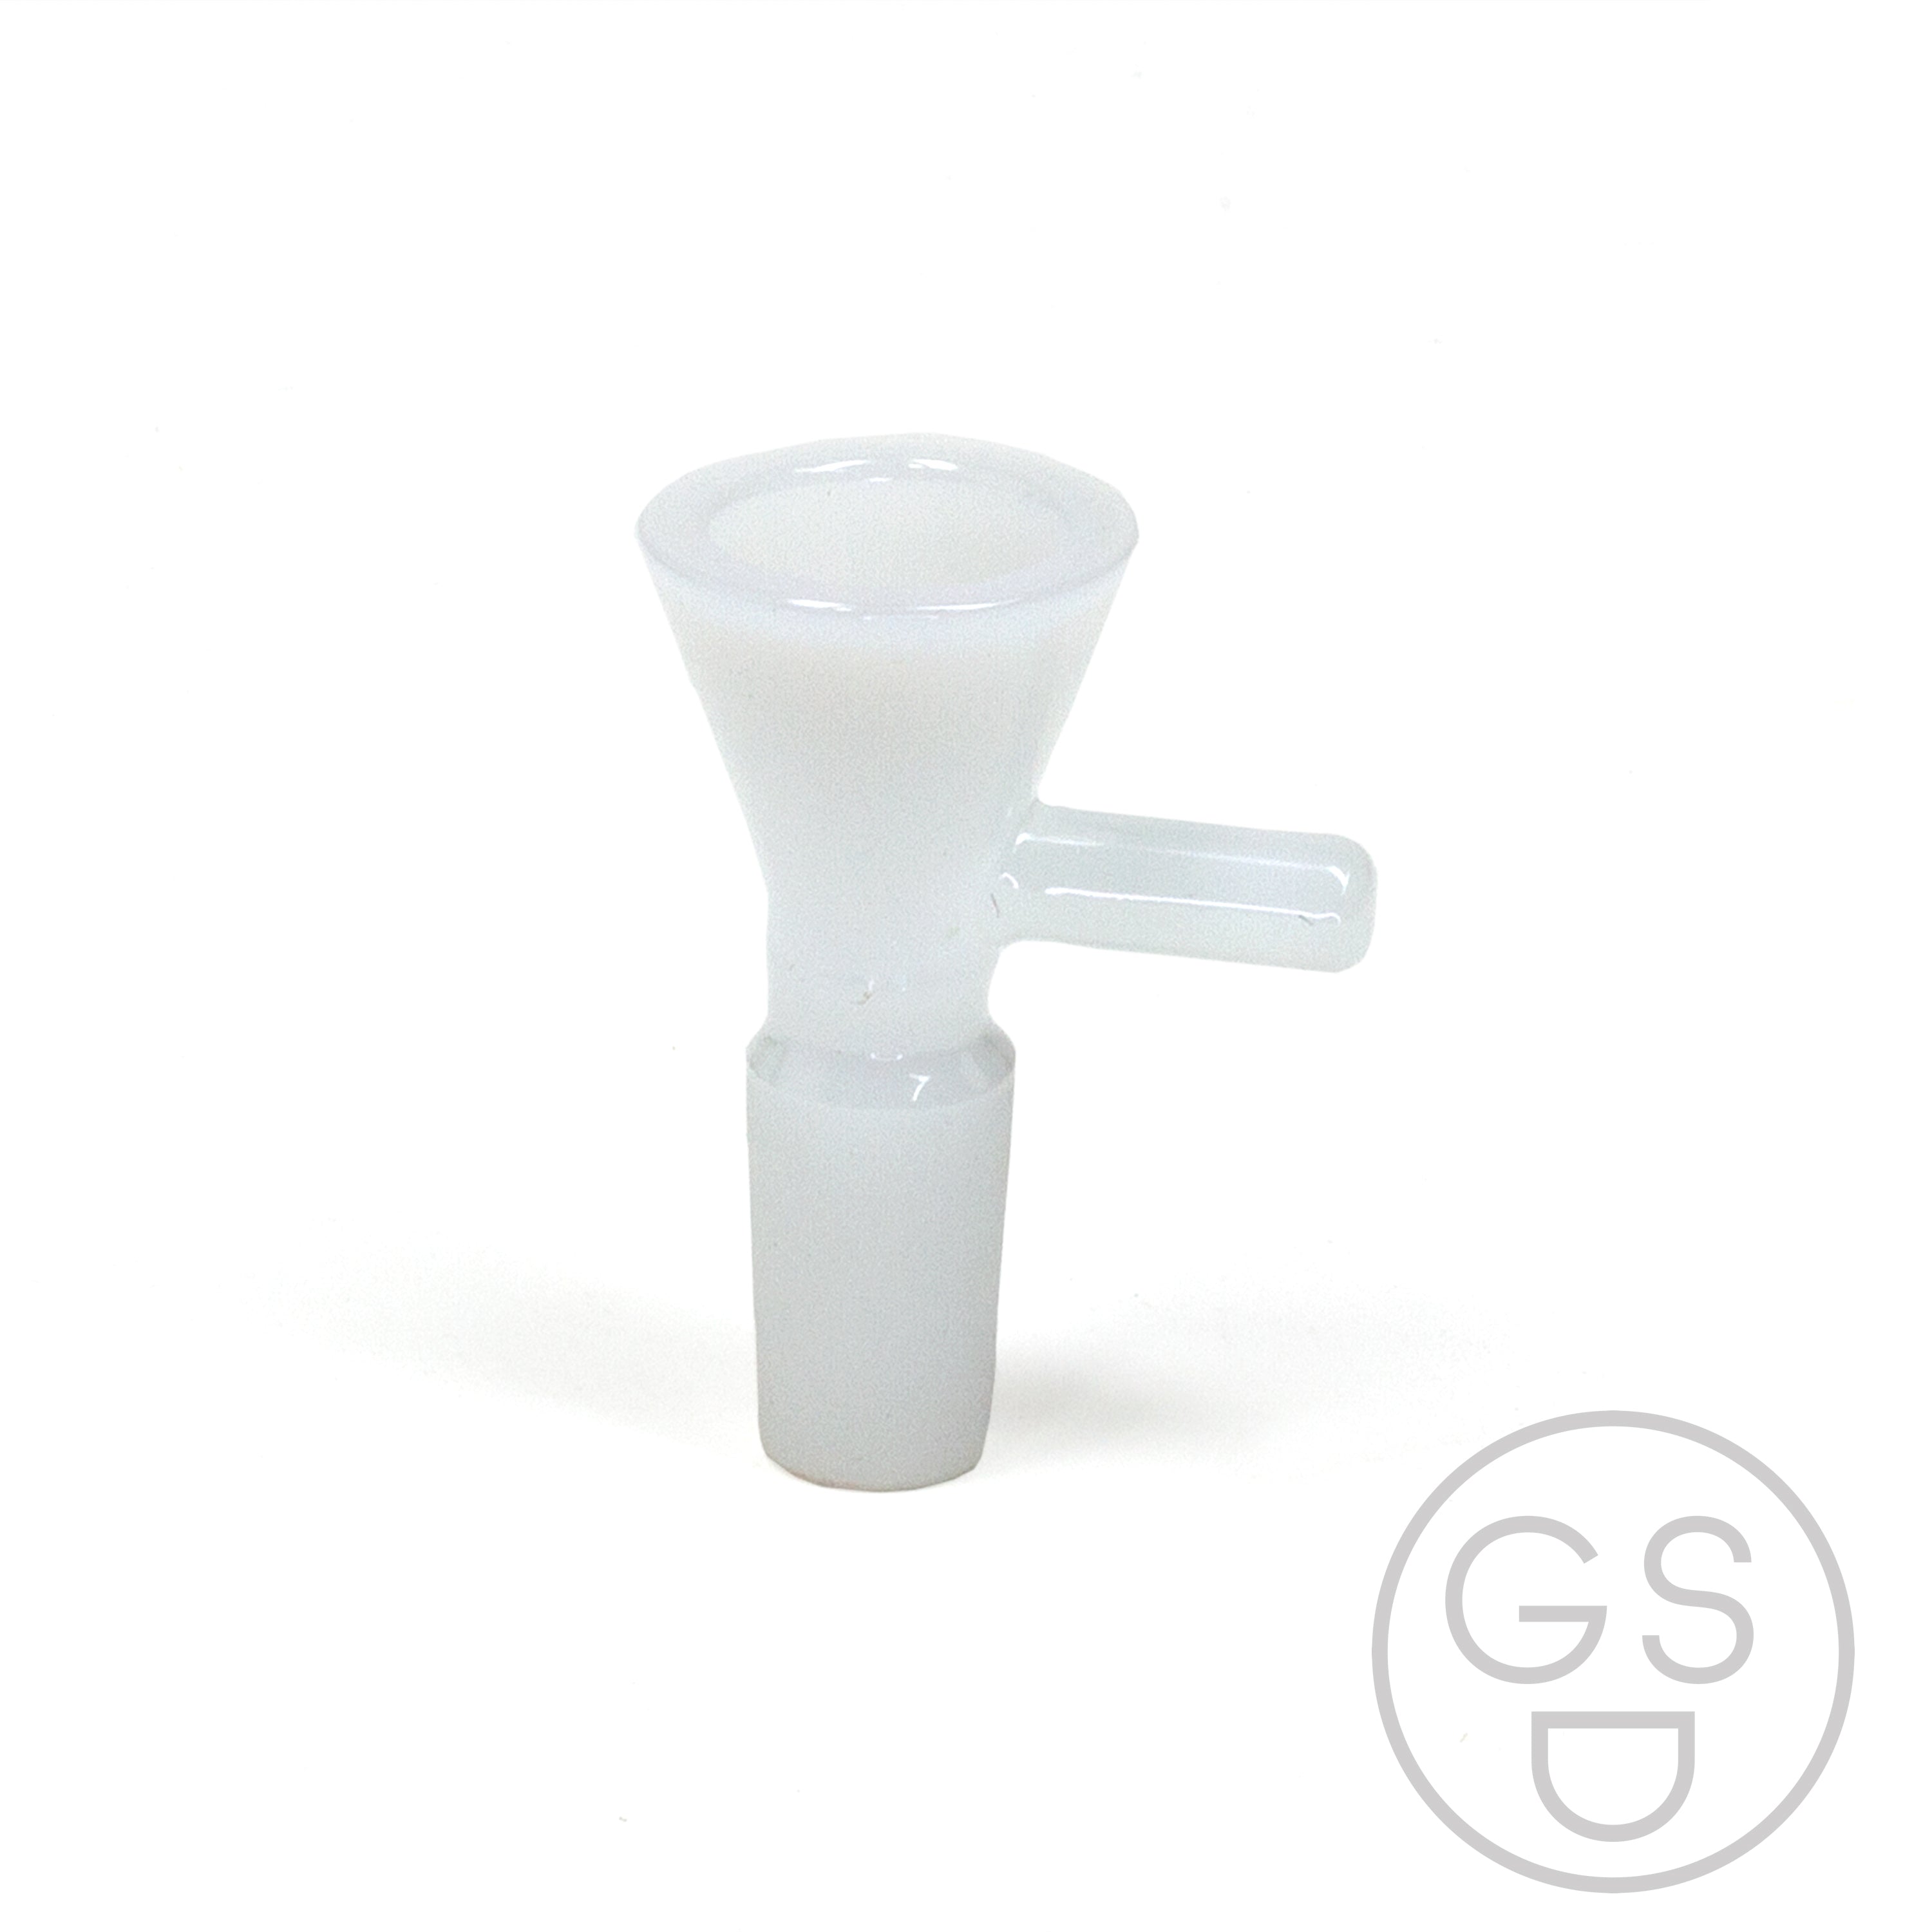 Prism Modular Waterpipe Bowl - Opaque / White